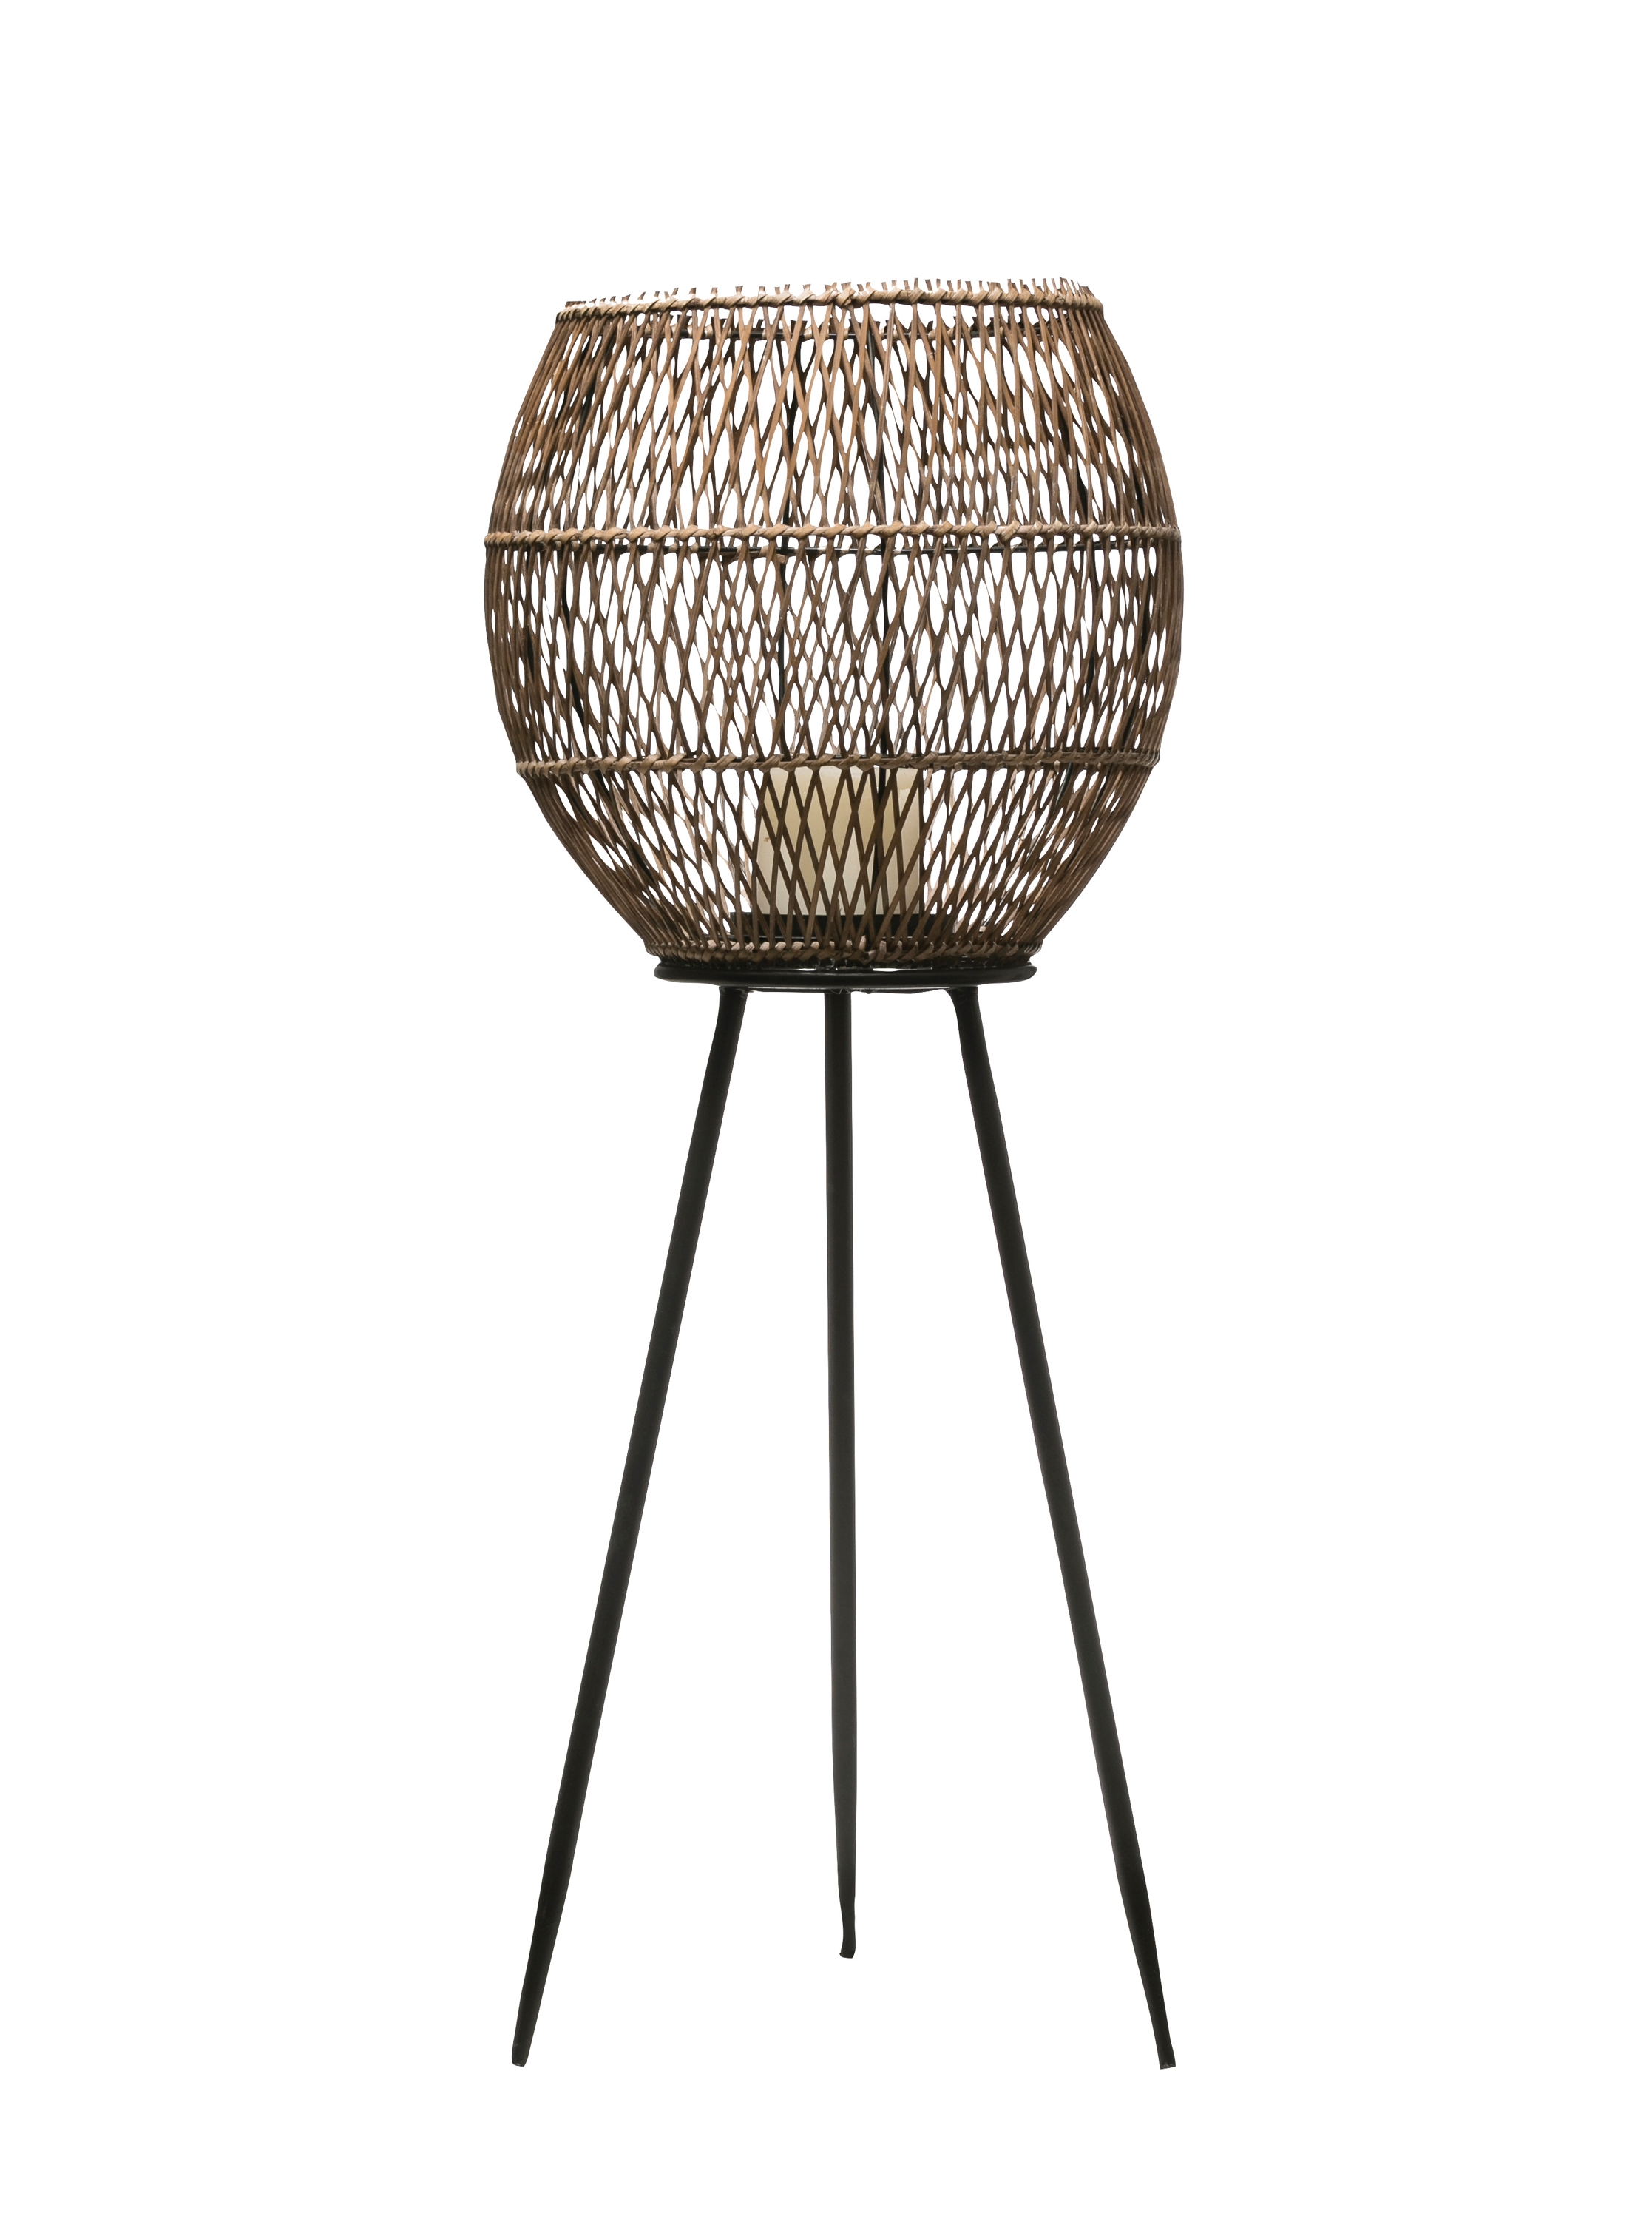 32.25"H Handwoven Bamboo & Rattan Lantern with Glass Insert & Tripod Metal Legs - Image 0